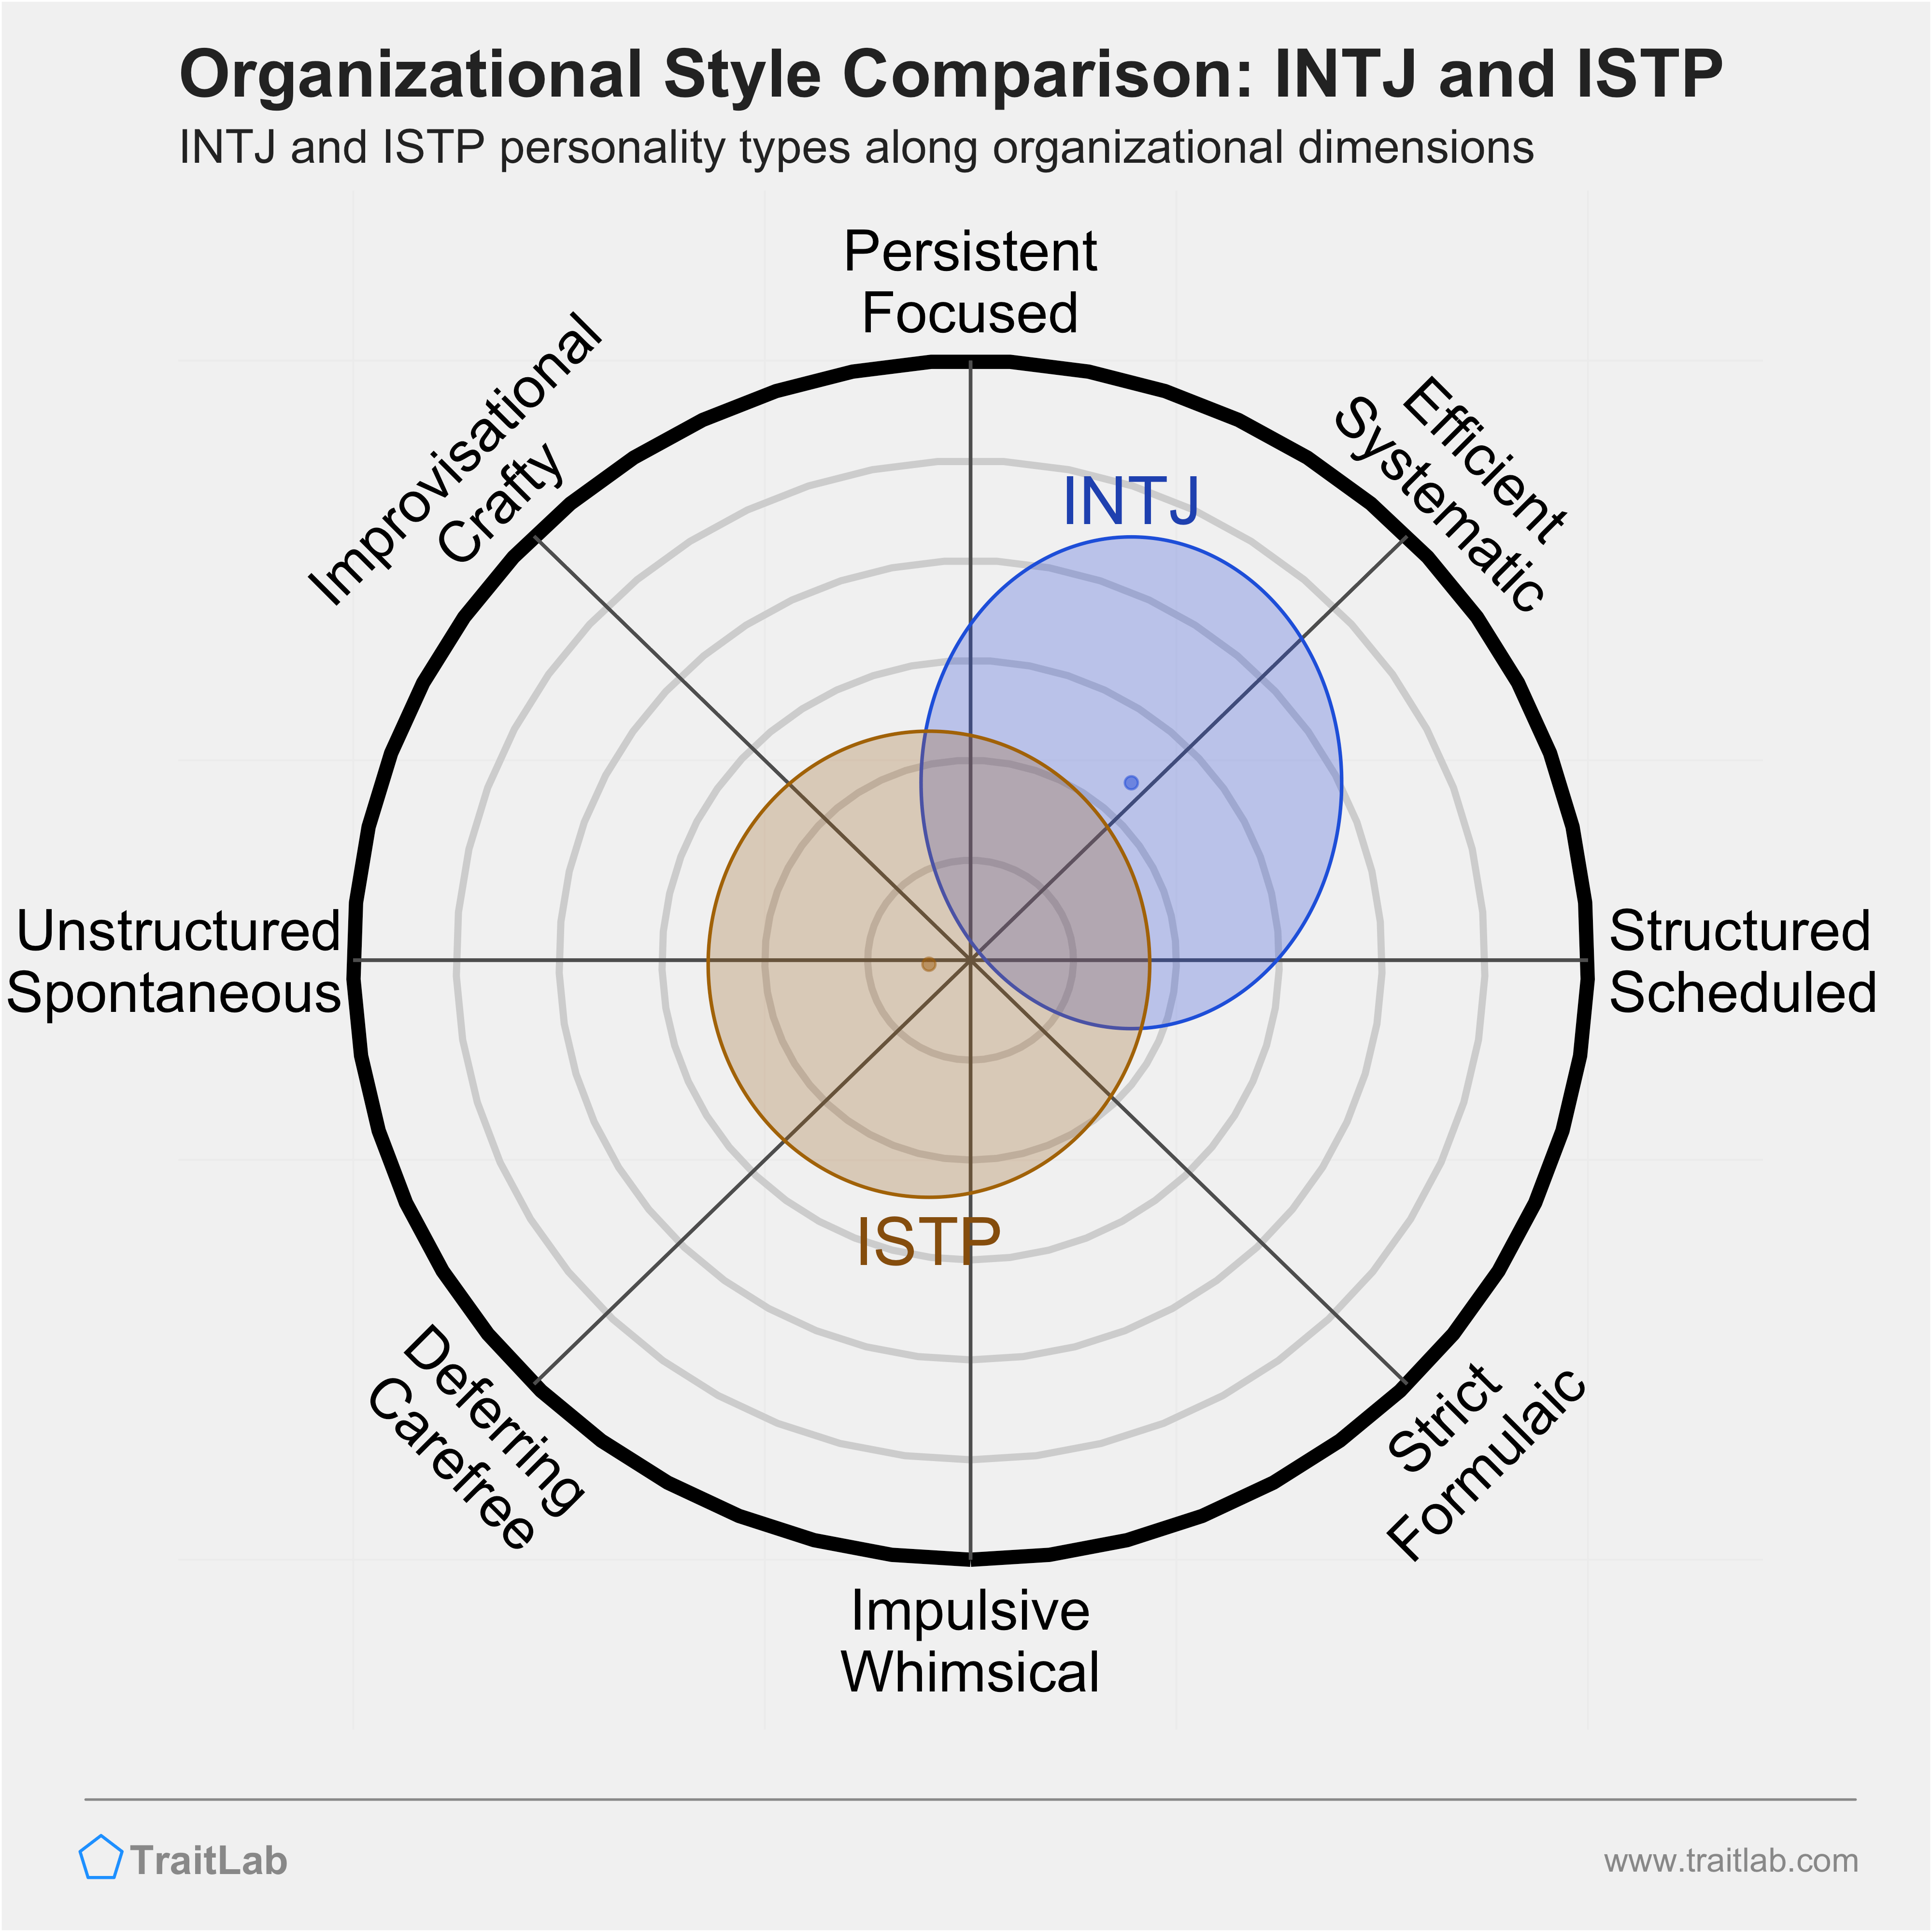 INTJ and ISTP comparison across organizational dimensions